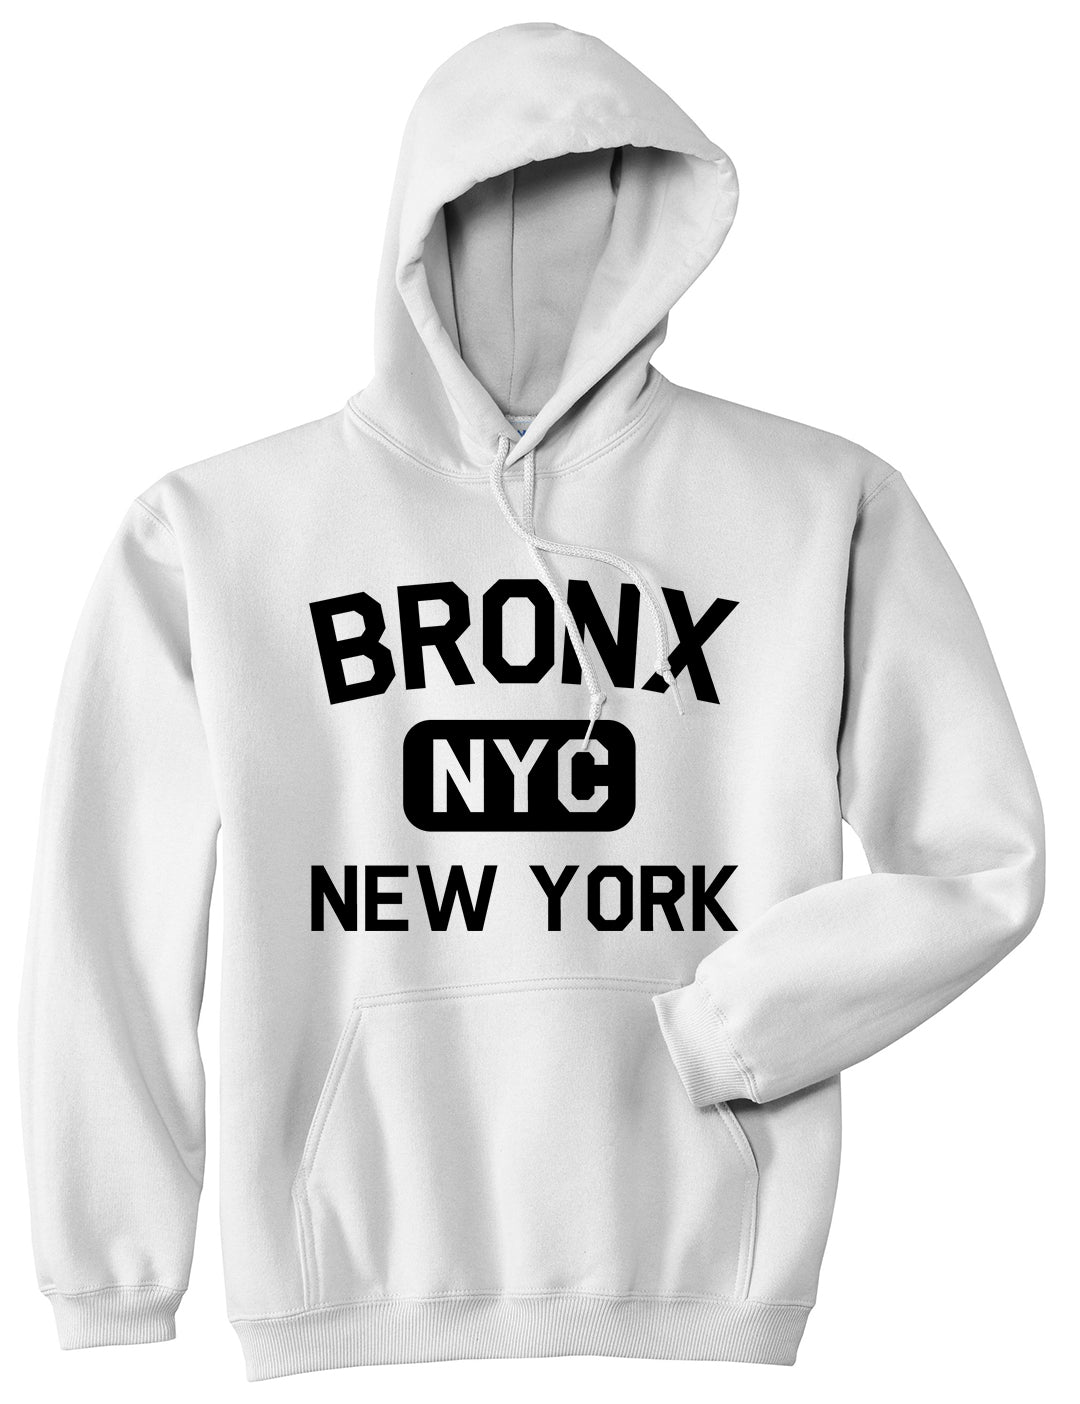 Bronx Gym NYC New York Mens Pullover Hoodie White